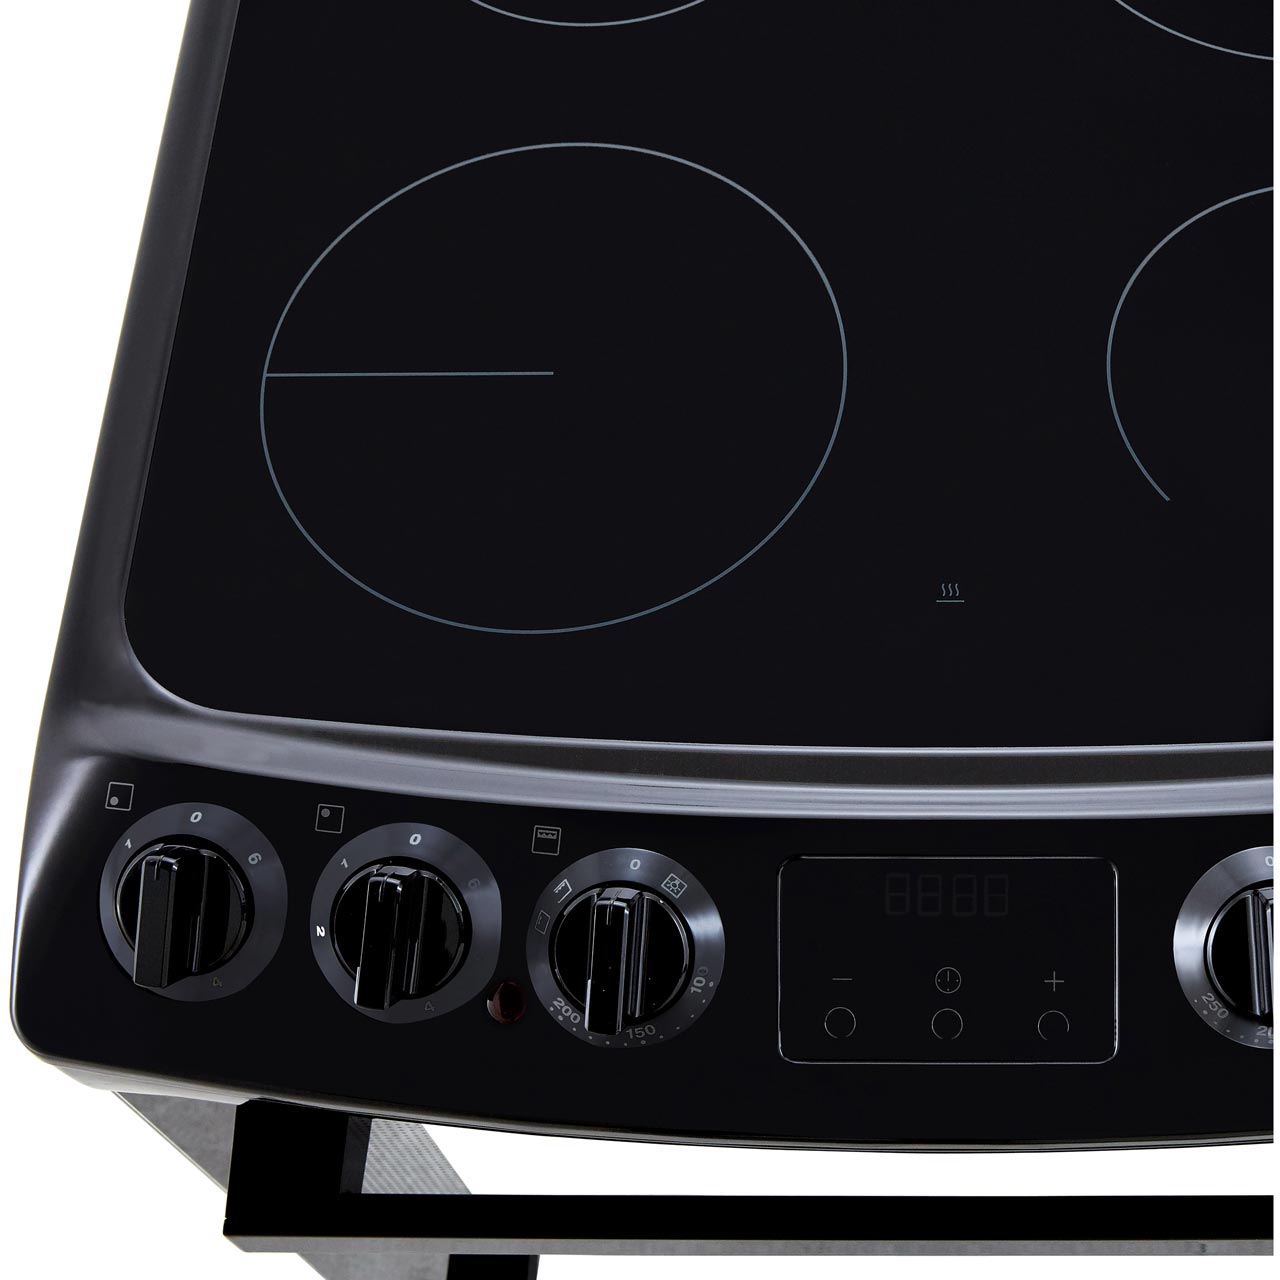 black electric cooker 55cm